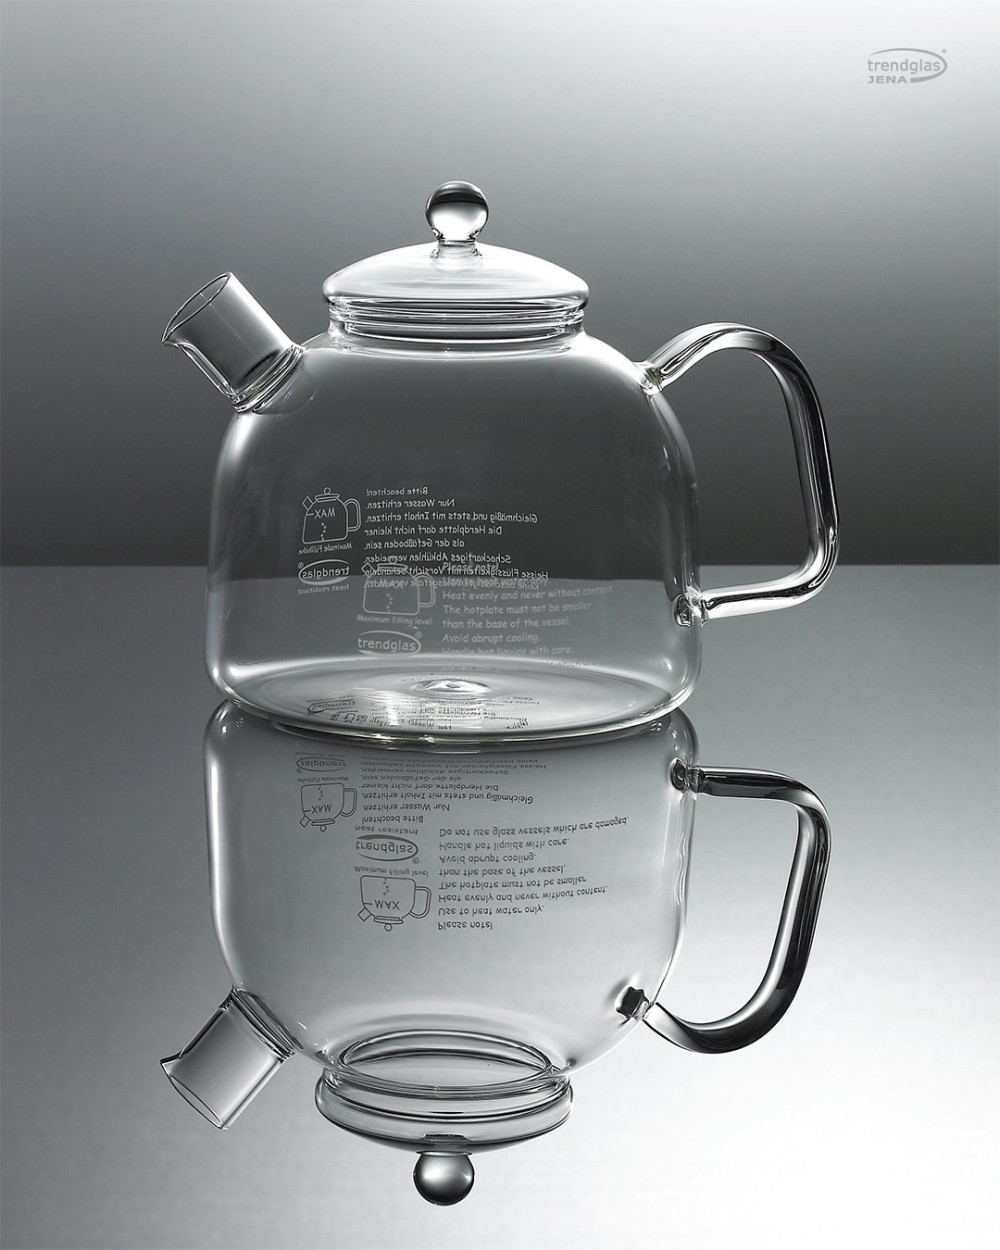 CLASSIC 1.75 G water kettle - trendglas JENA